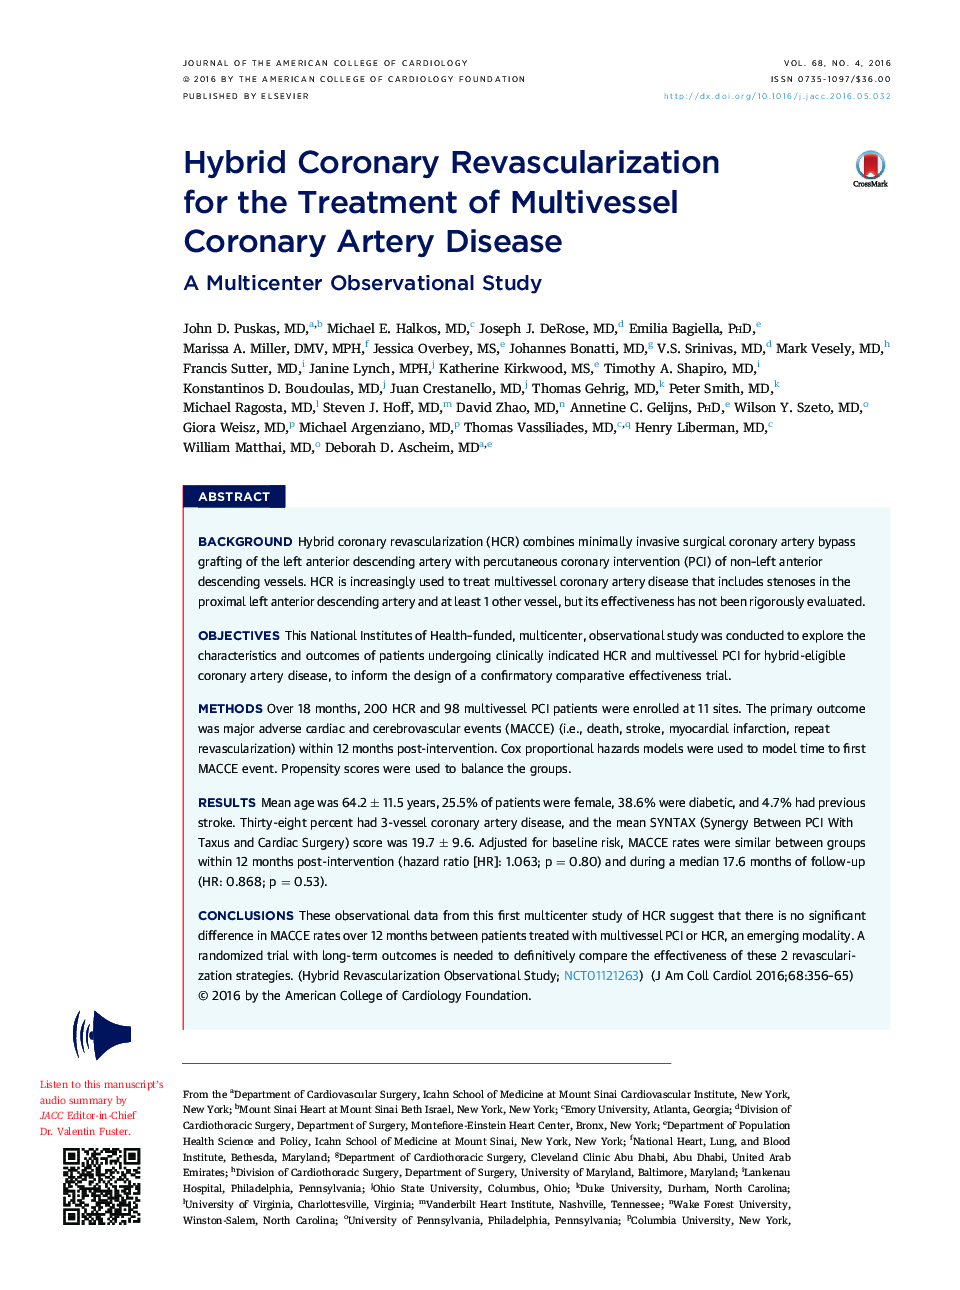 Hybrid Coronary Revascularization forÂ theÂ Treatment of Multivessel CoronaryÂ Artery Disease: A Multicenter Observational Study